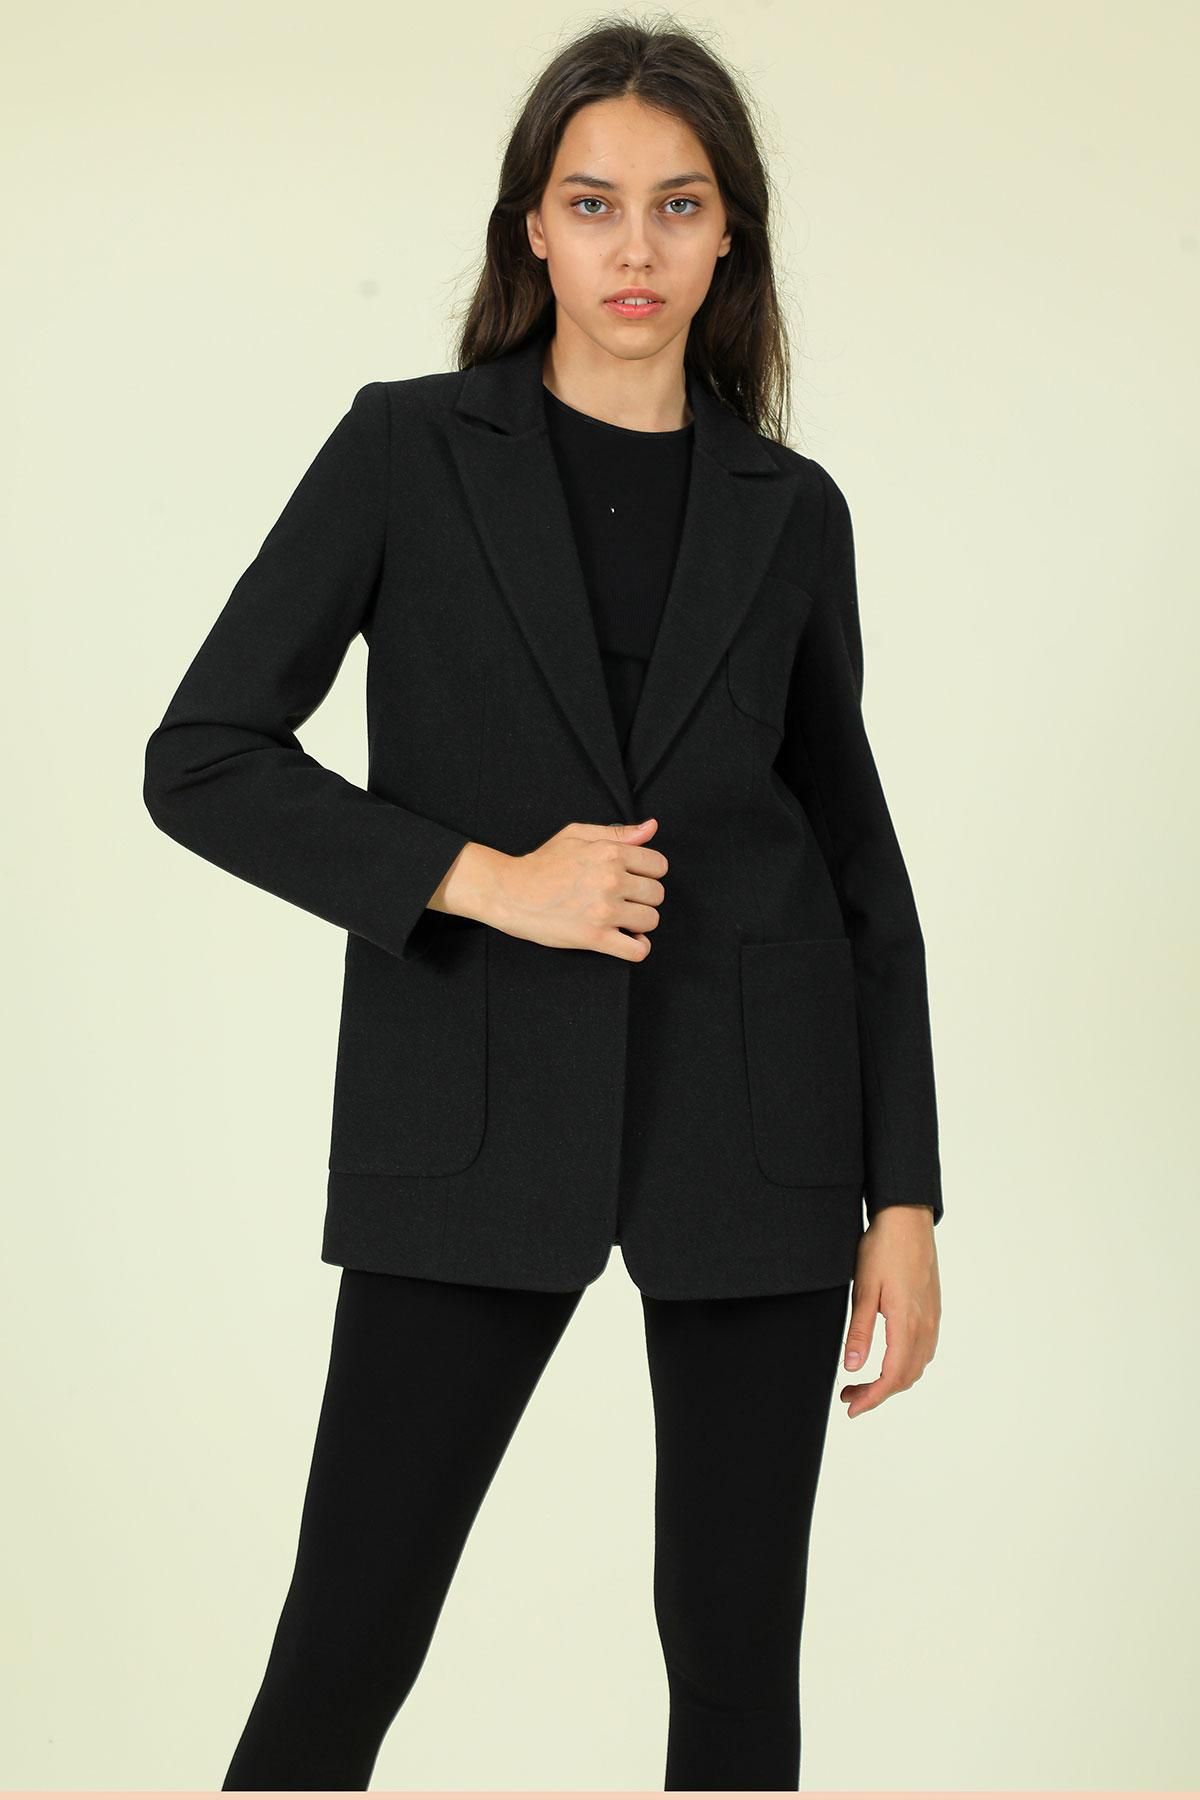 Vivento 3369 BLACK Women Jacket | Dosso Dossi